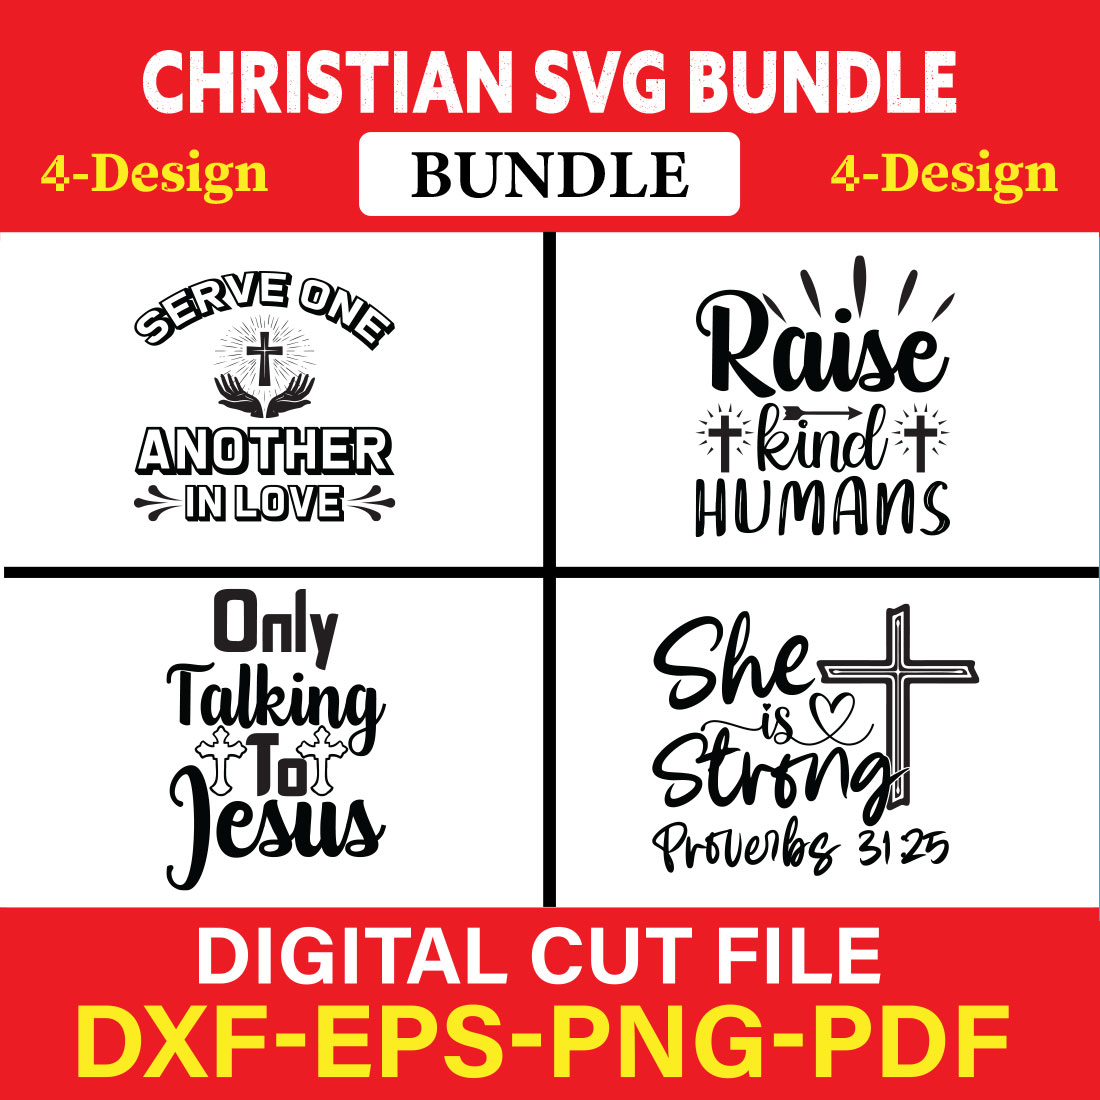 Christian T-shirt Design Bundle Vol-32 cover image.